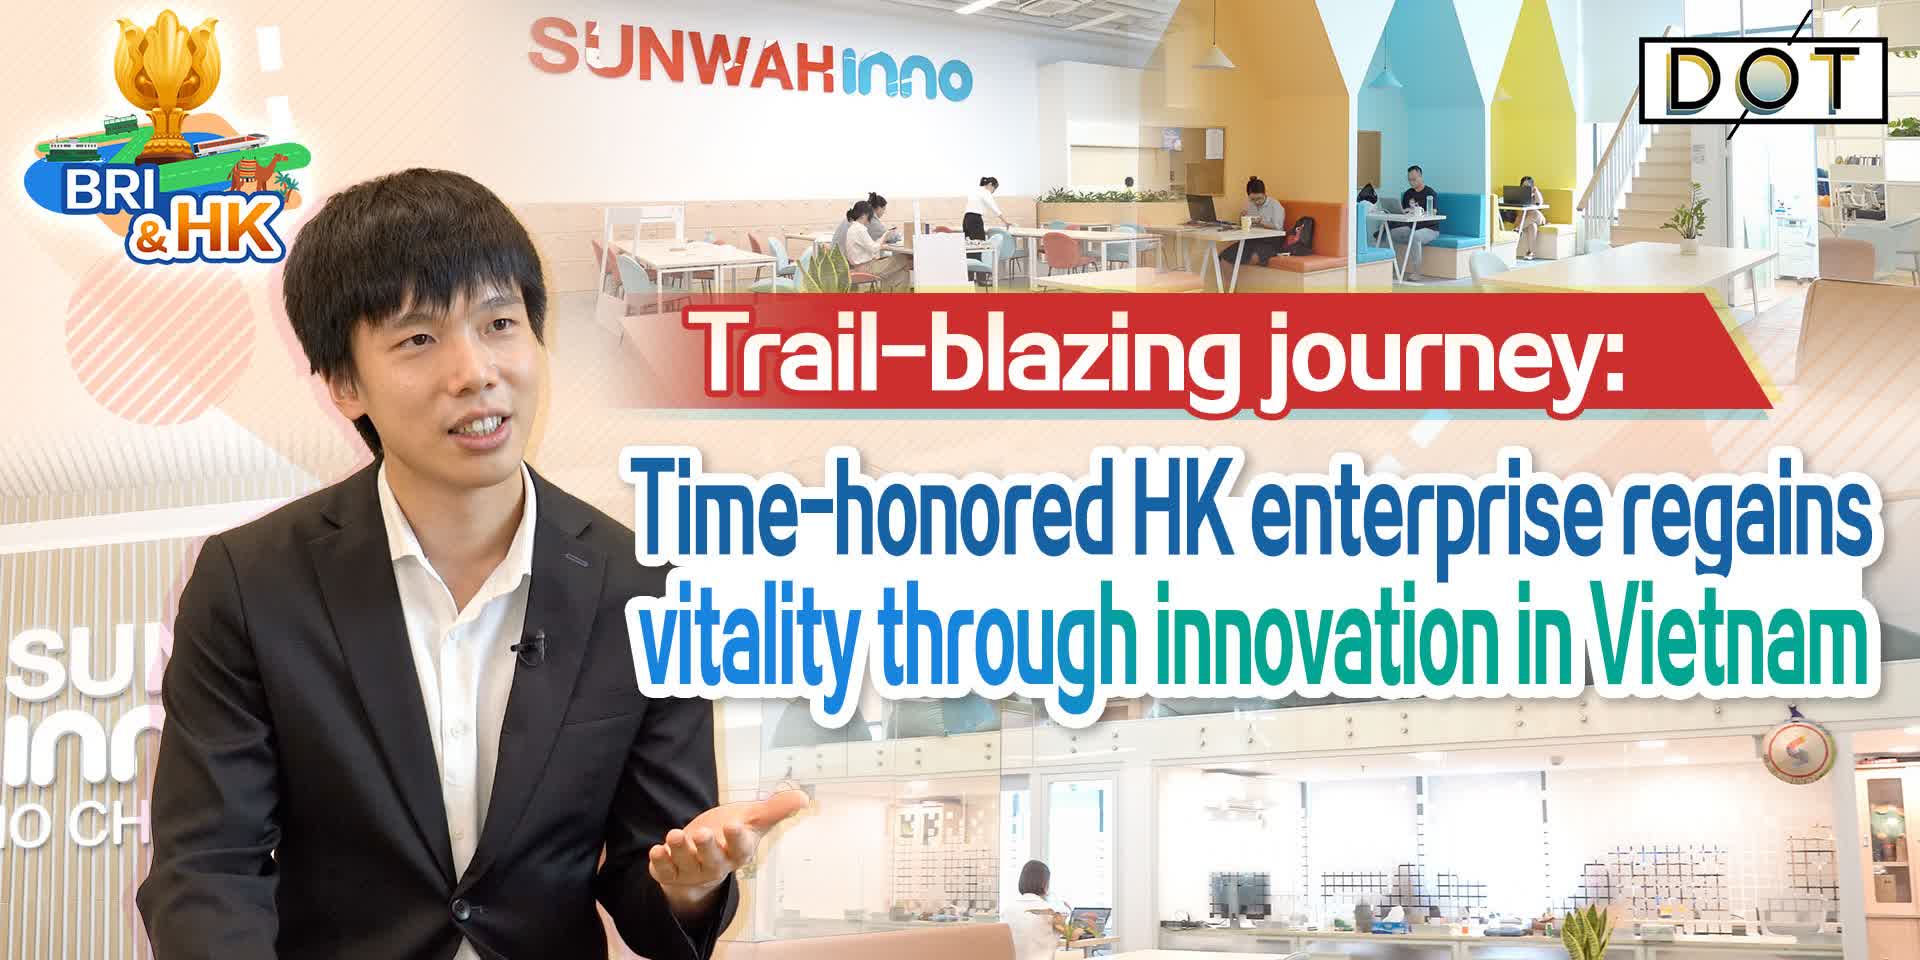 BRI & HK EP3 | Trail-blazing journey: Time-honored HK enterprise regains vitality through innovation in Vietnam